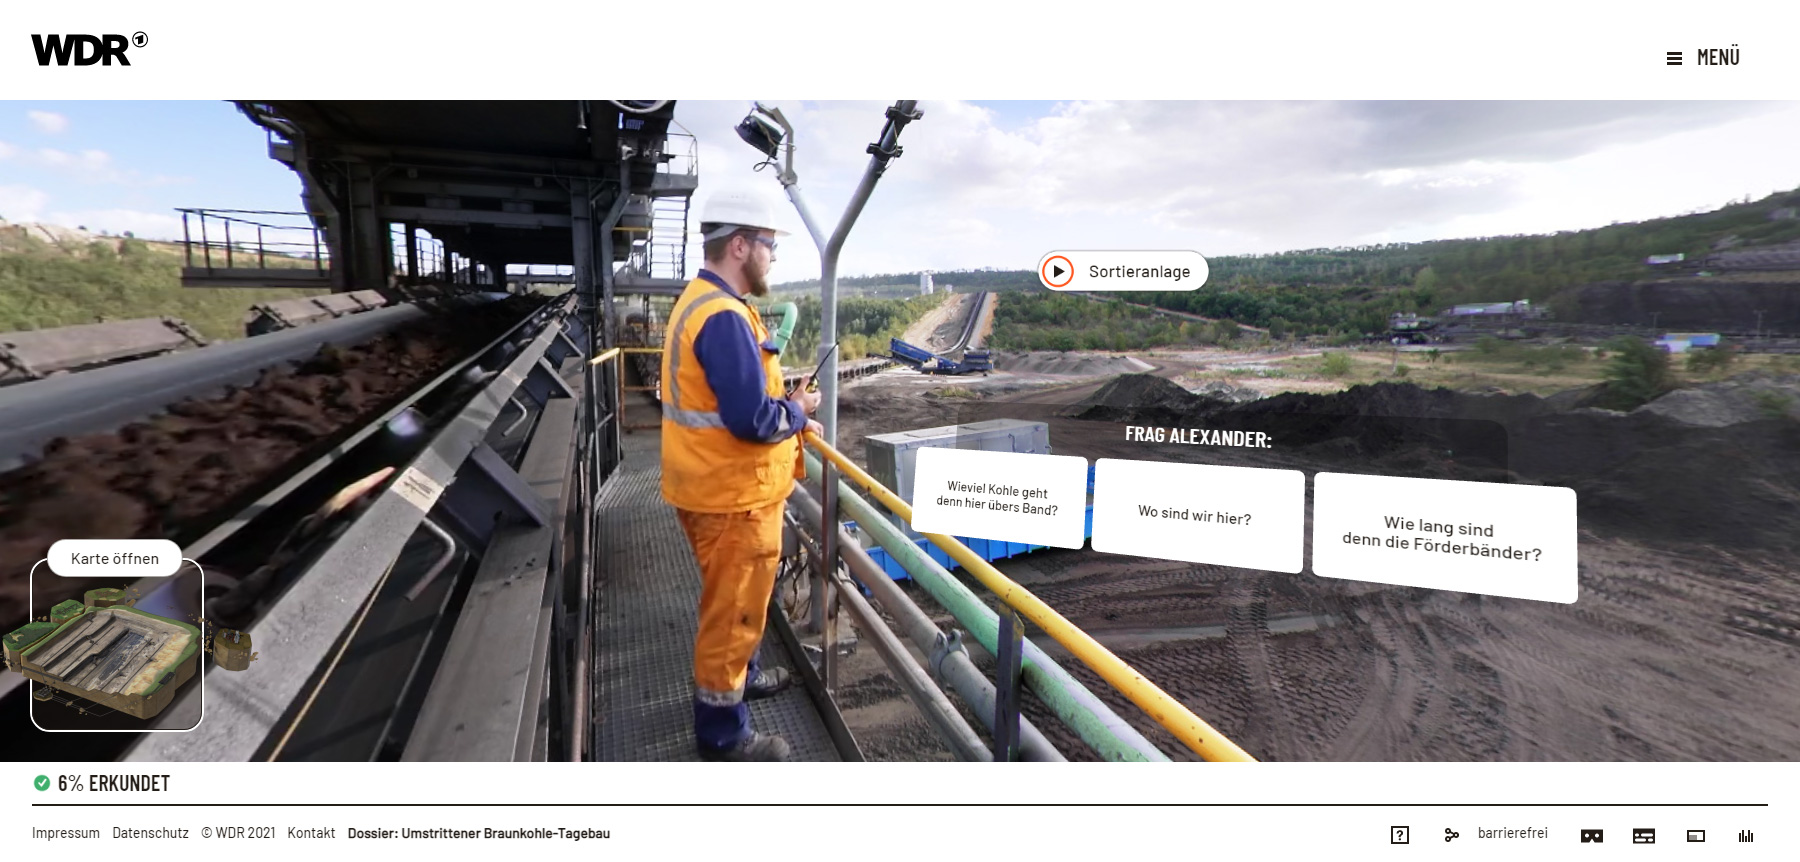 WDR Lignite Mining 360° VR - Website of the Day